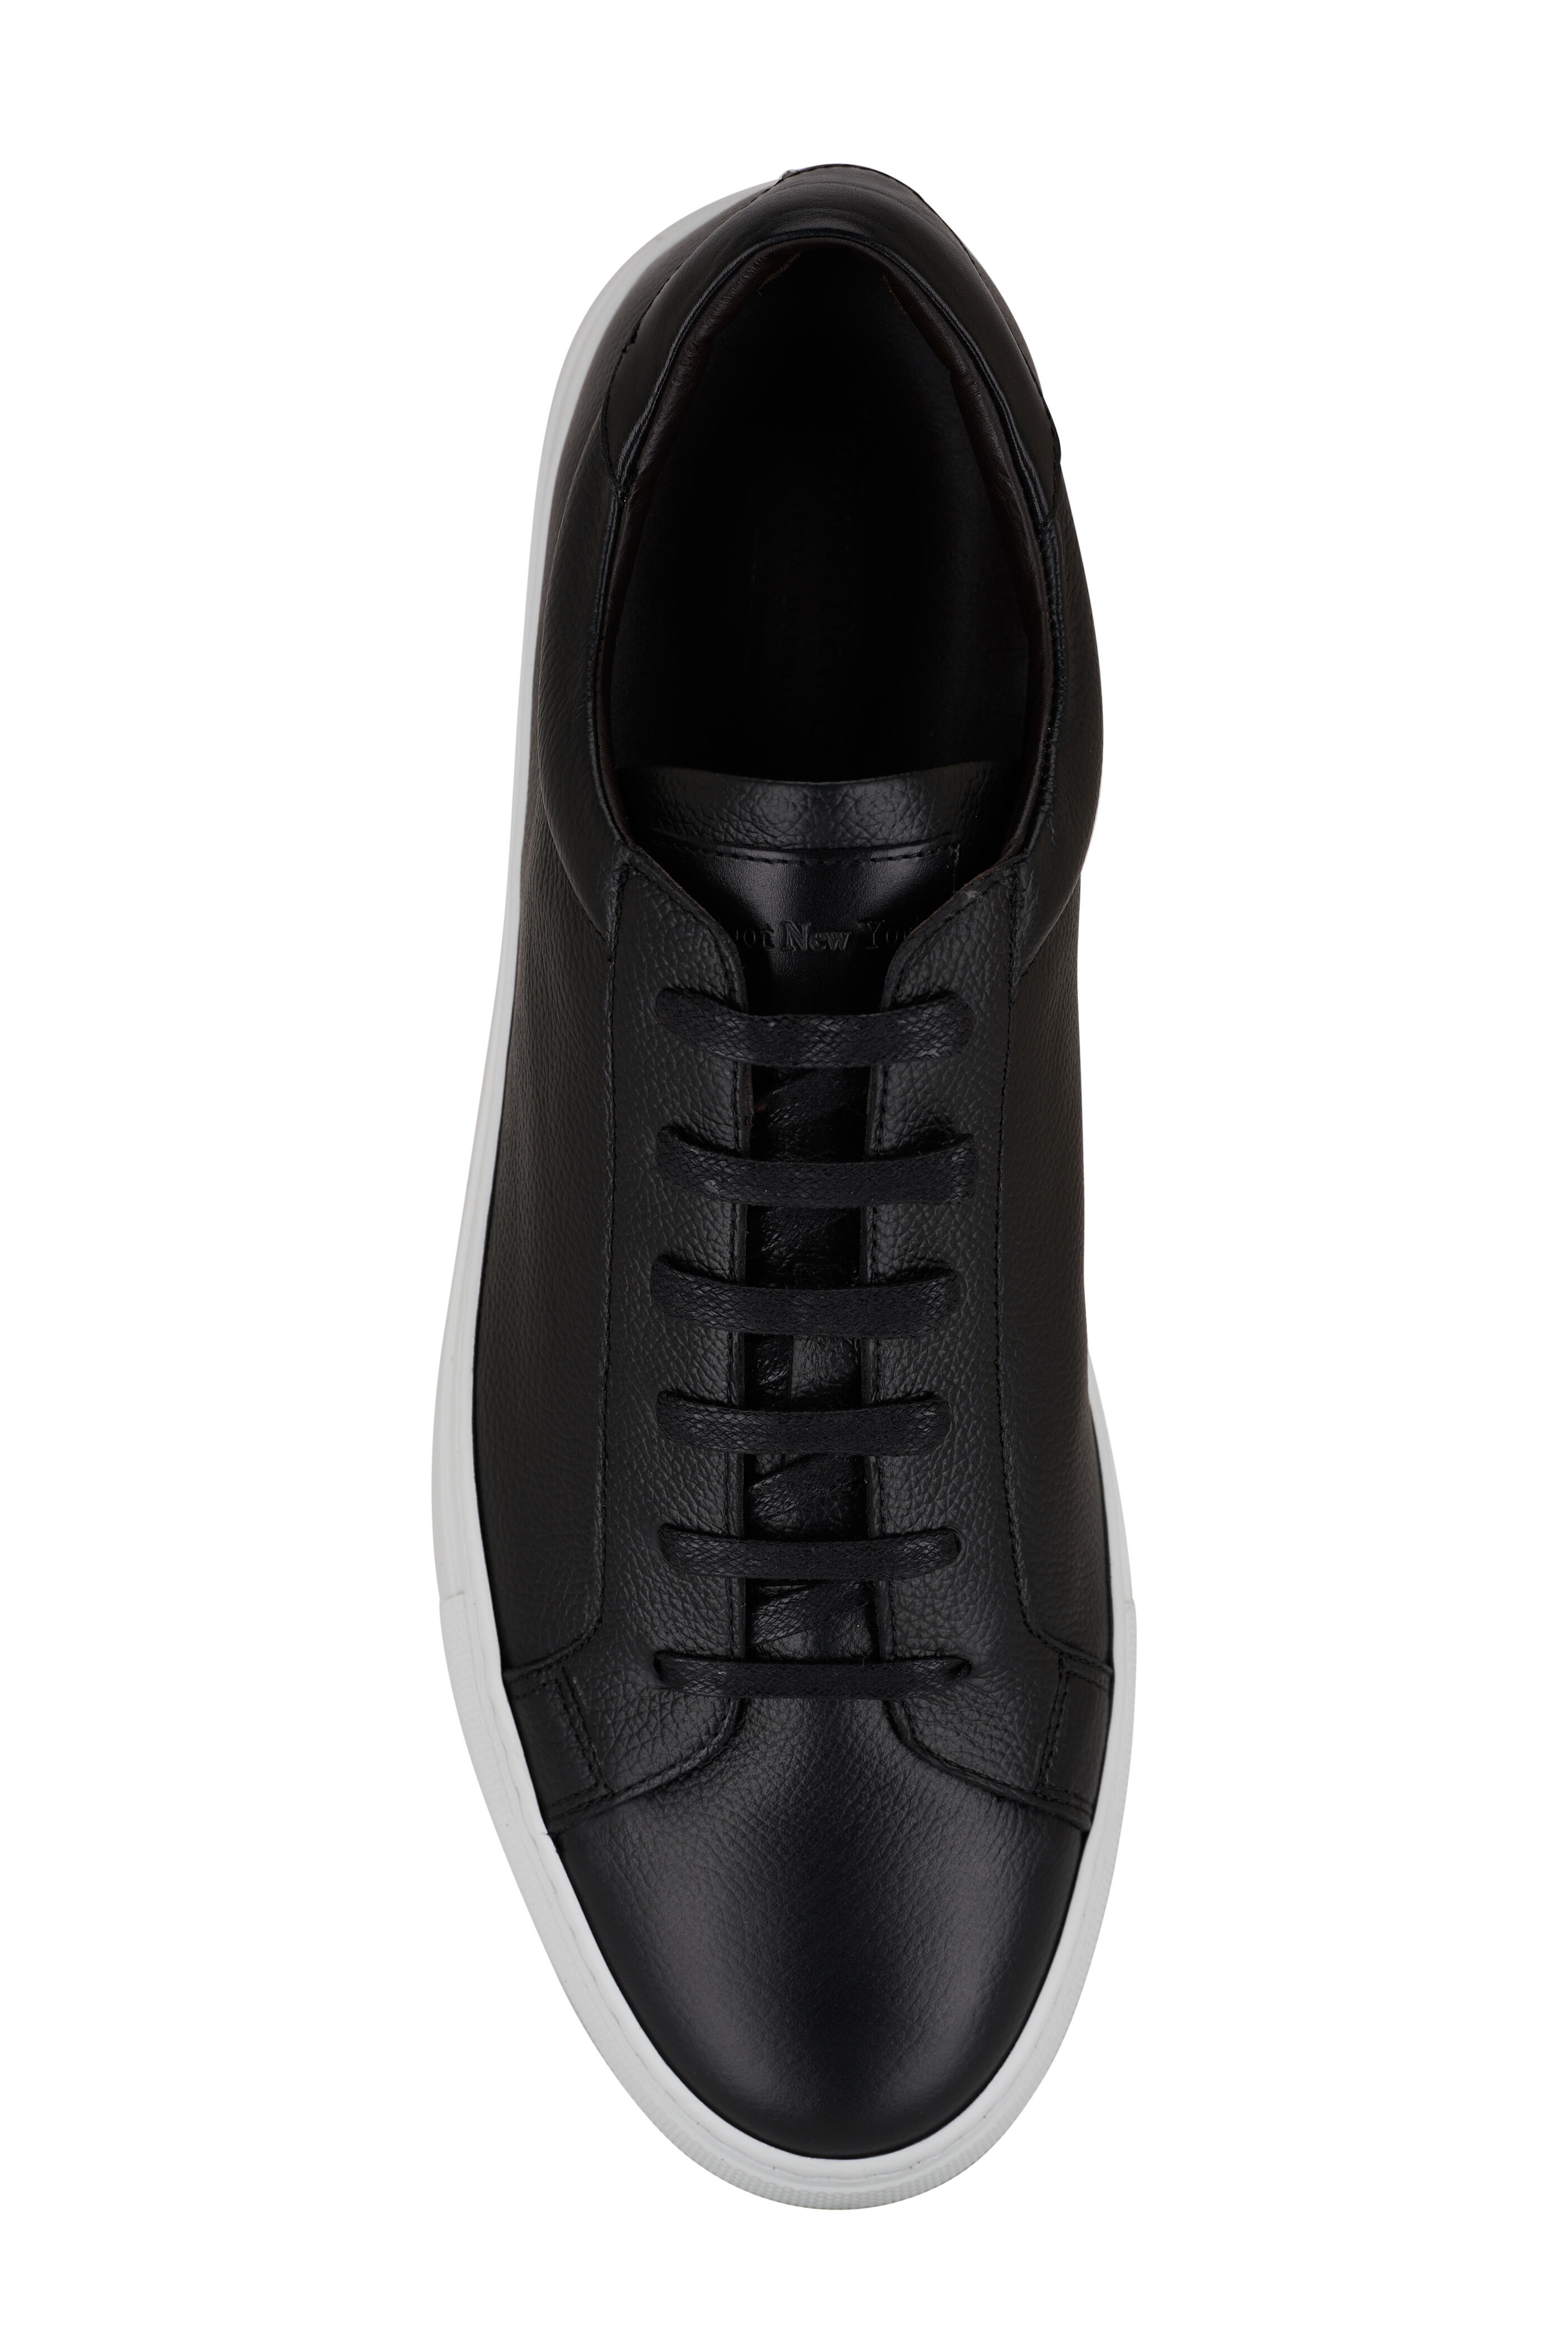 To Boot New York - Sierra Panama Black Leather Sneaker